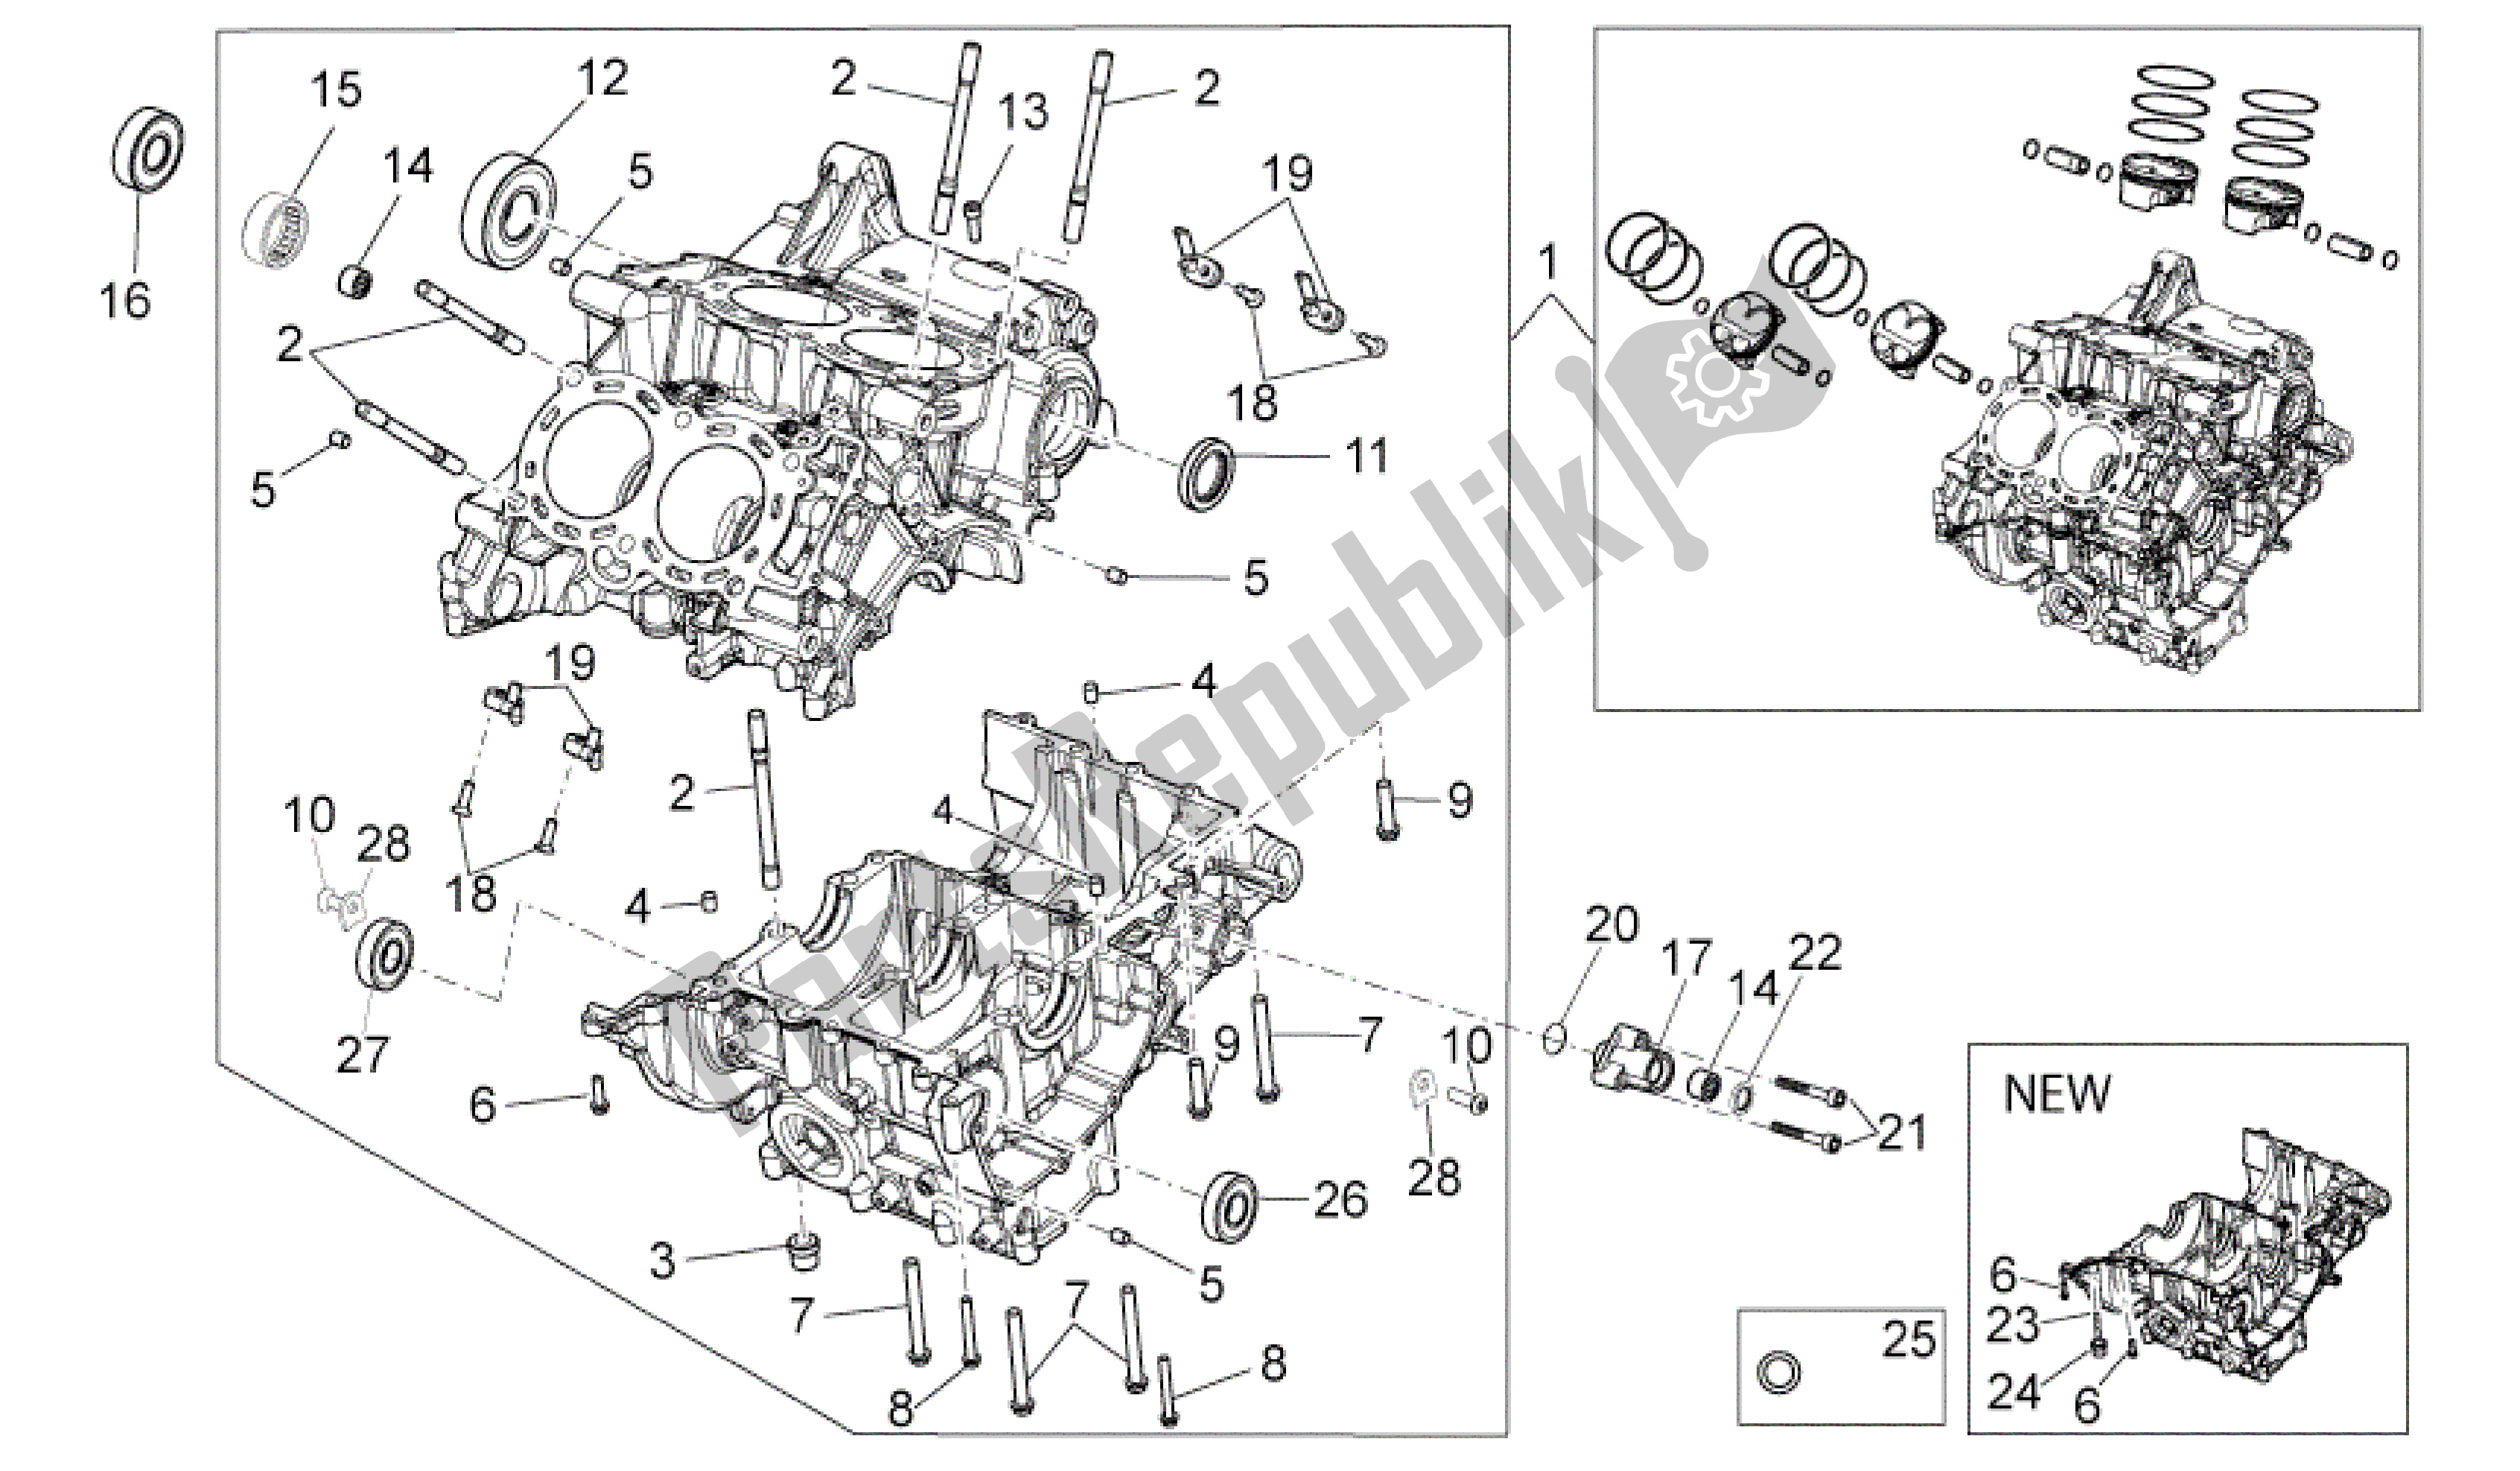 All parts for the Crank-case I of the Aprilia RSV4 Aprc R ABS 3984 1000 2013